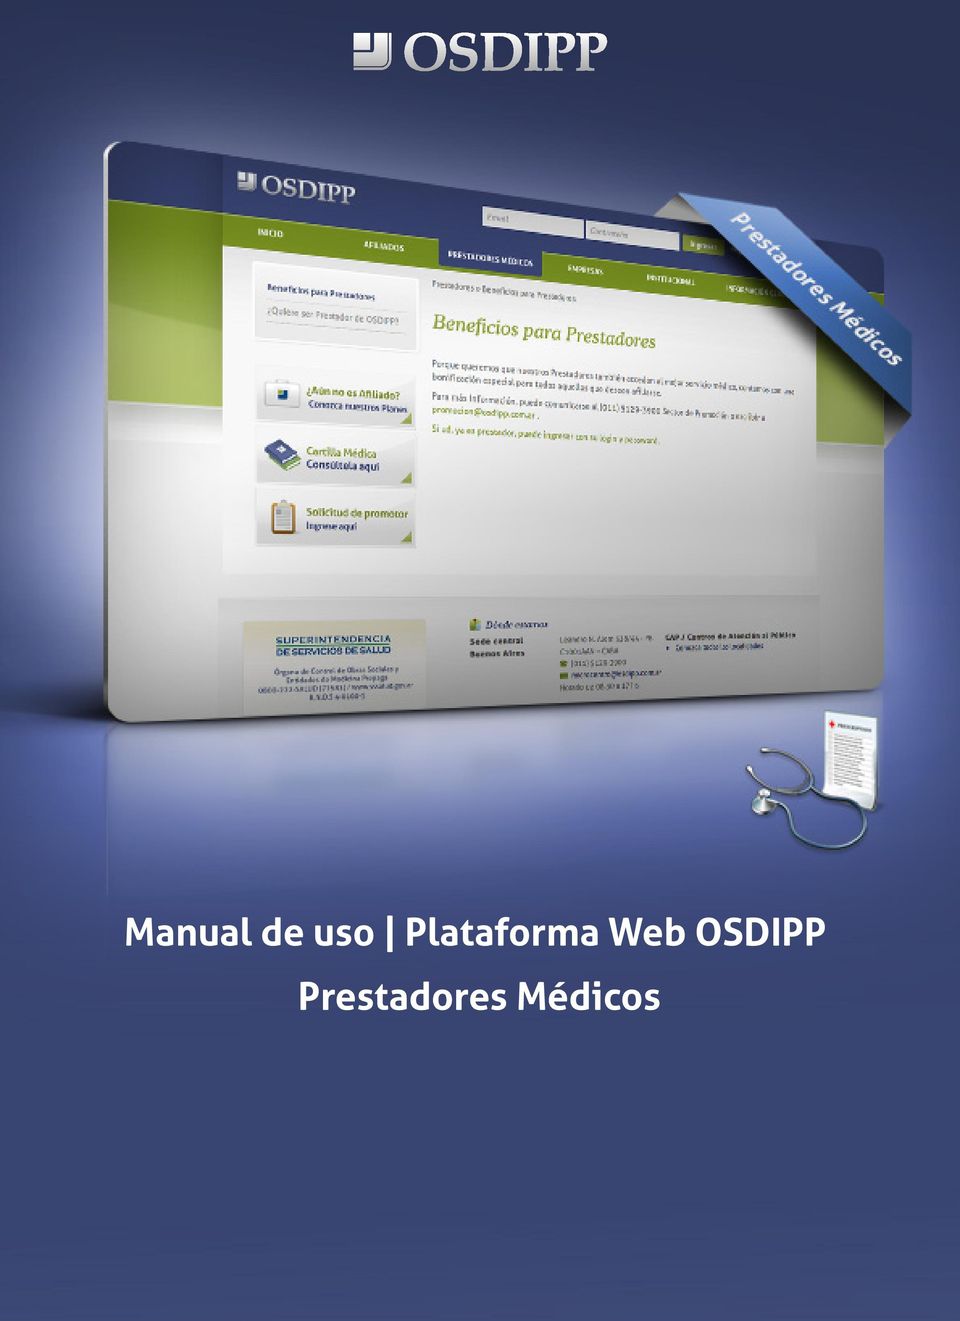 Web OSDIPP